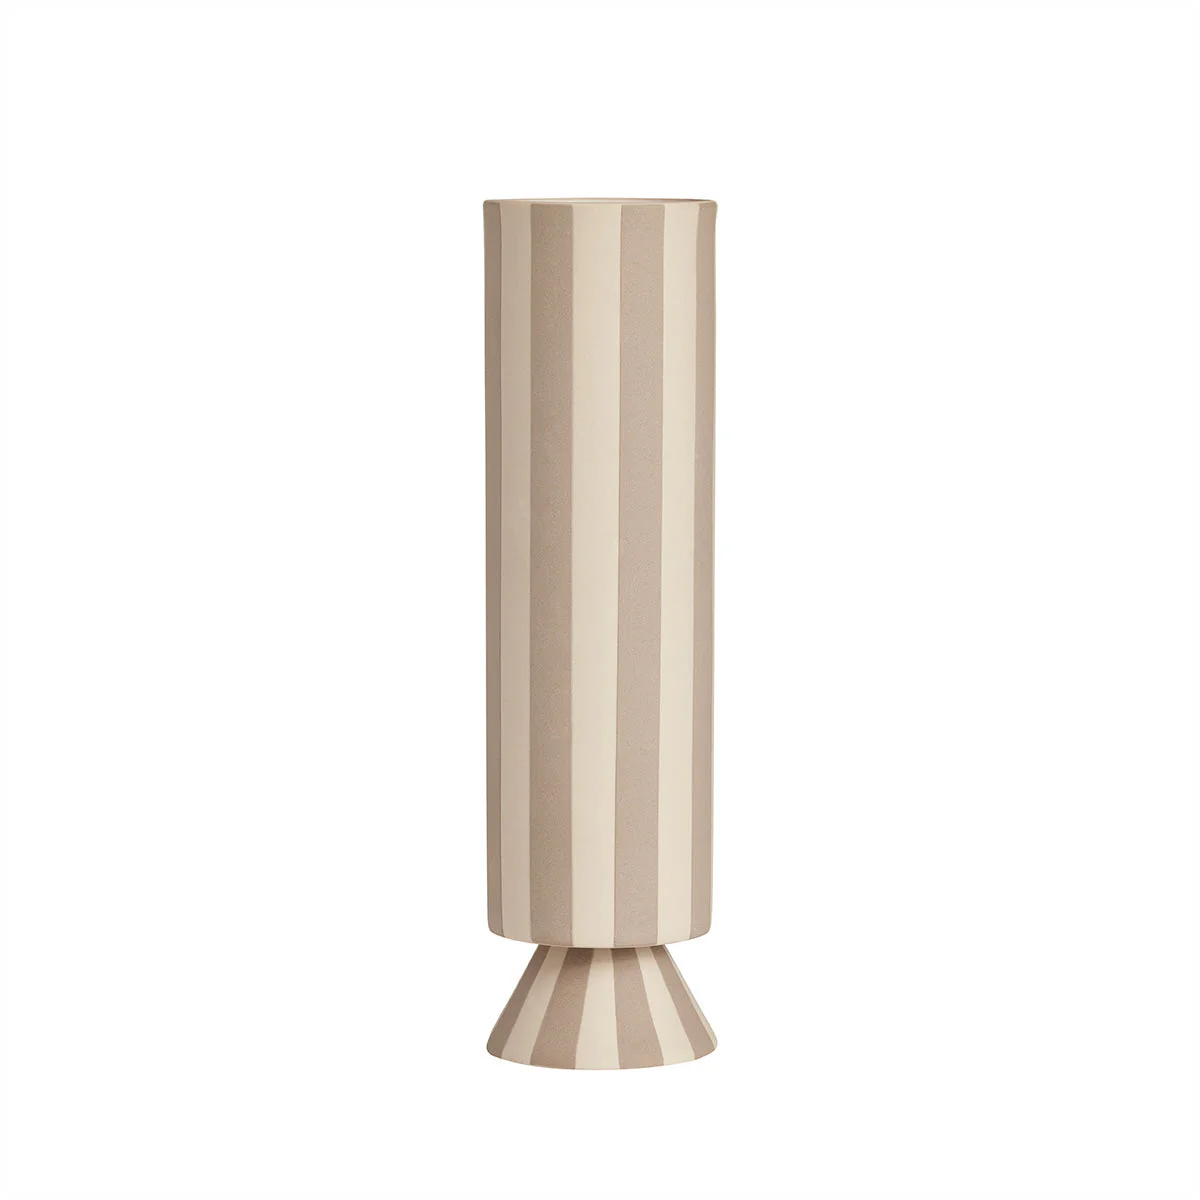 Oyoy Design Clay Toppu Vase - High